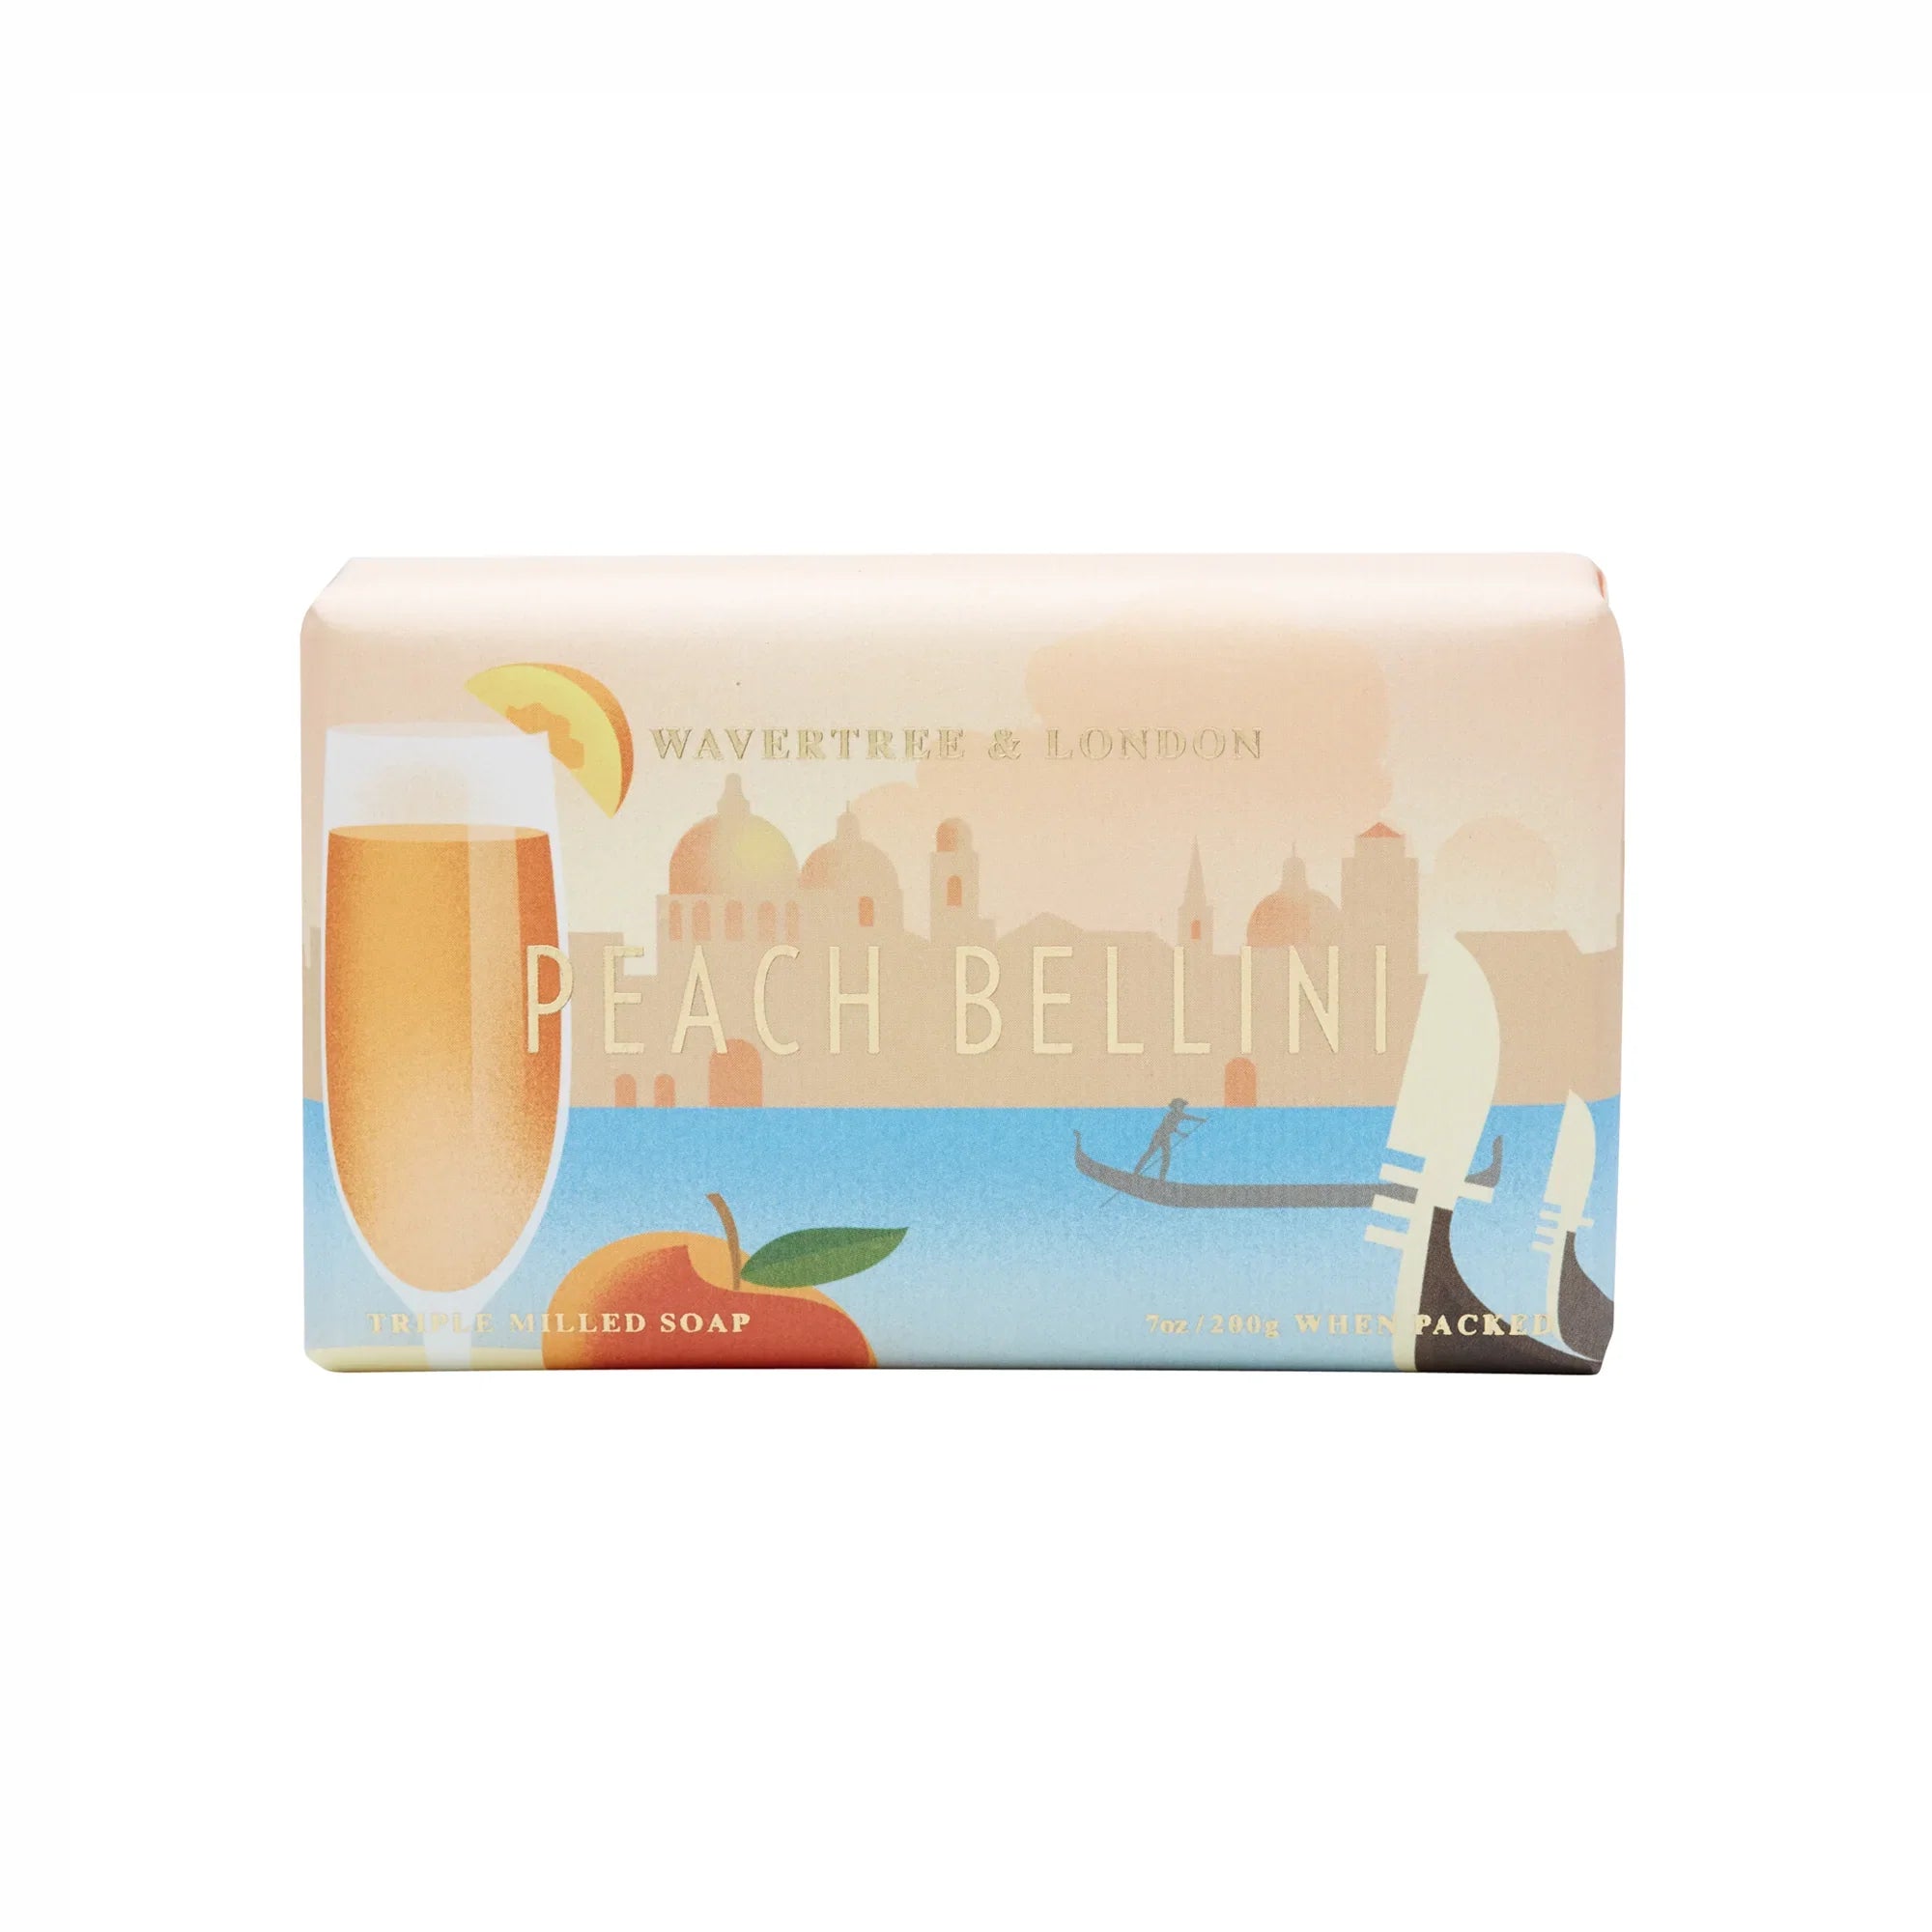 Wavertree and London - Peach Bellini Soap Bar 200g